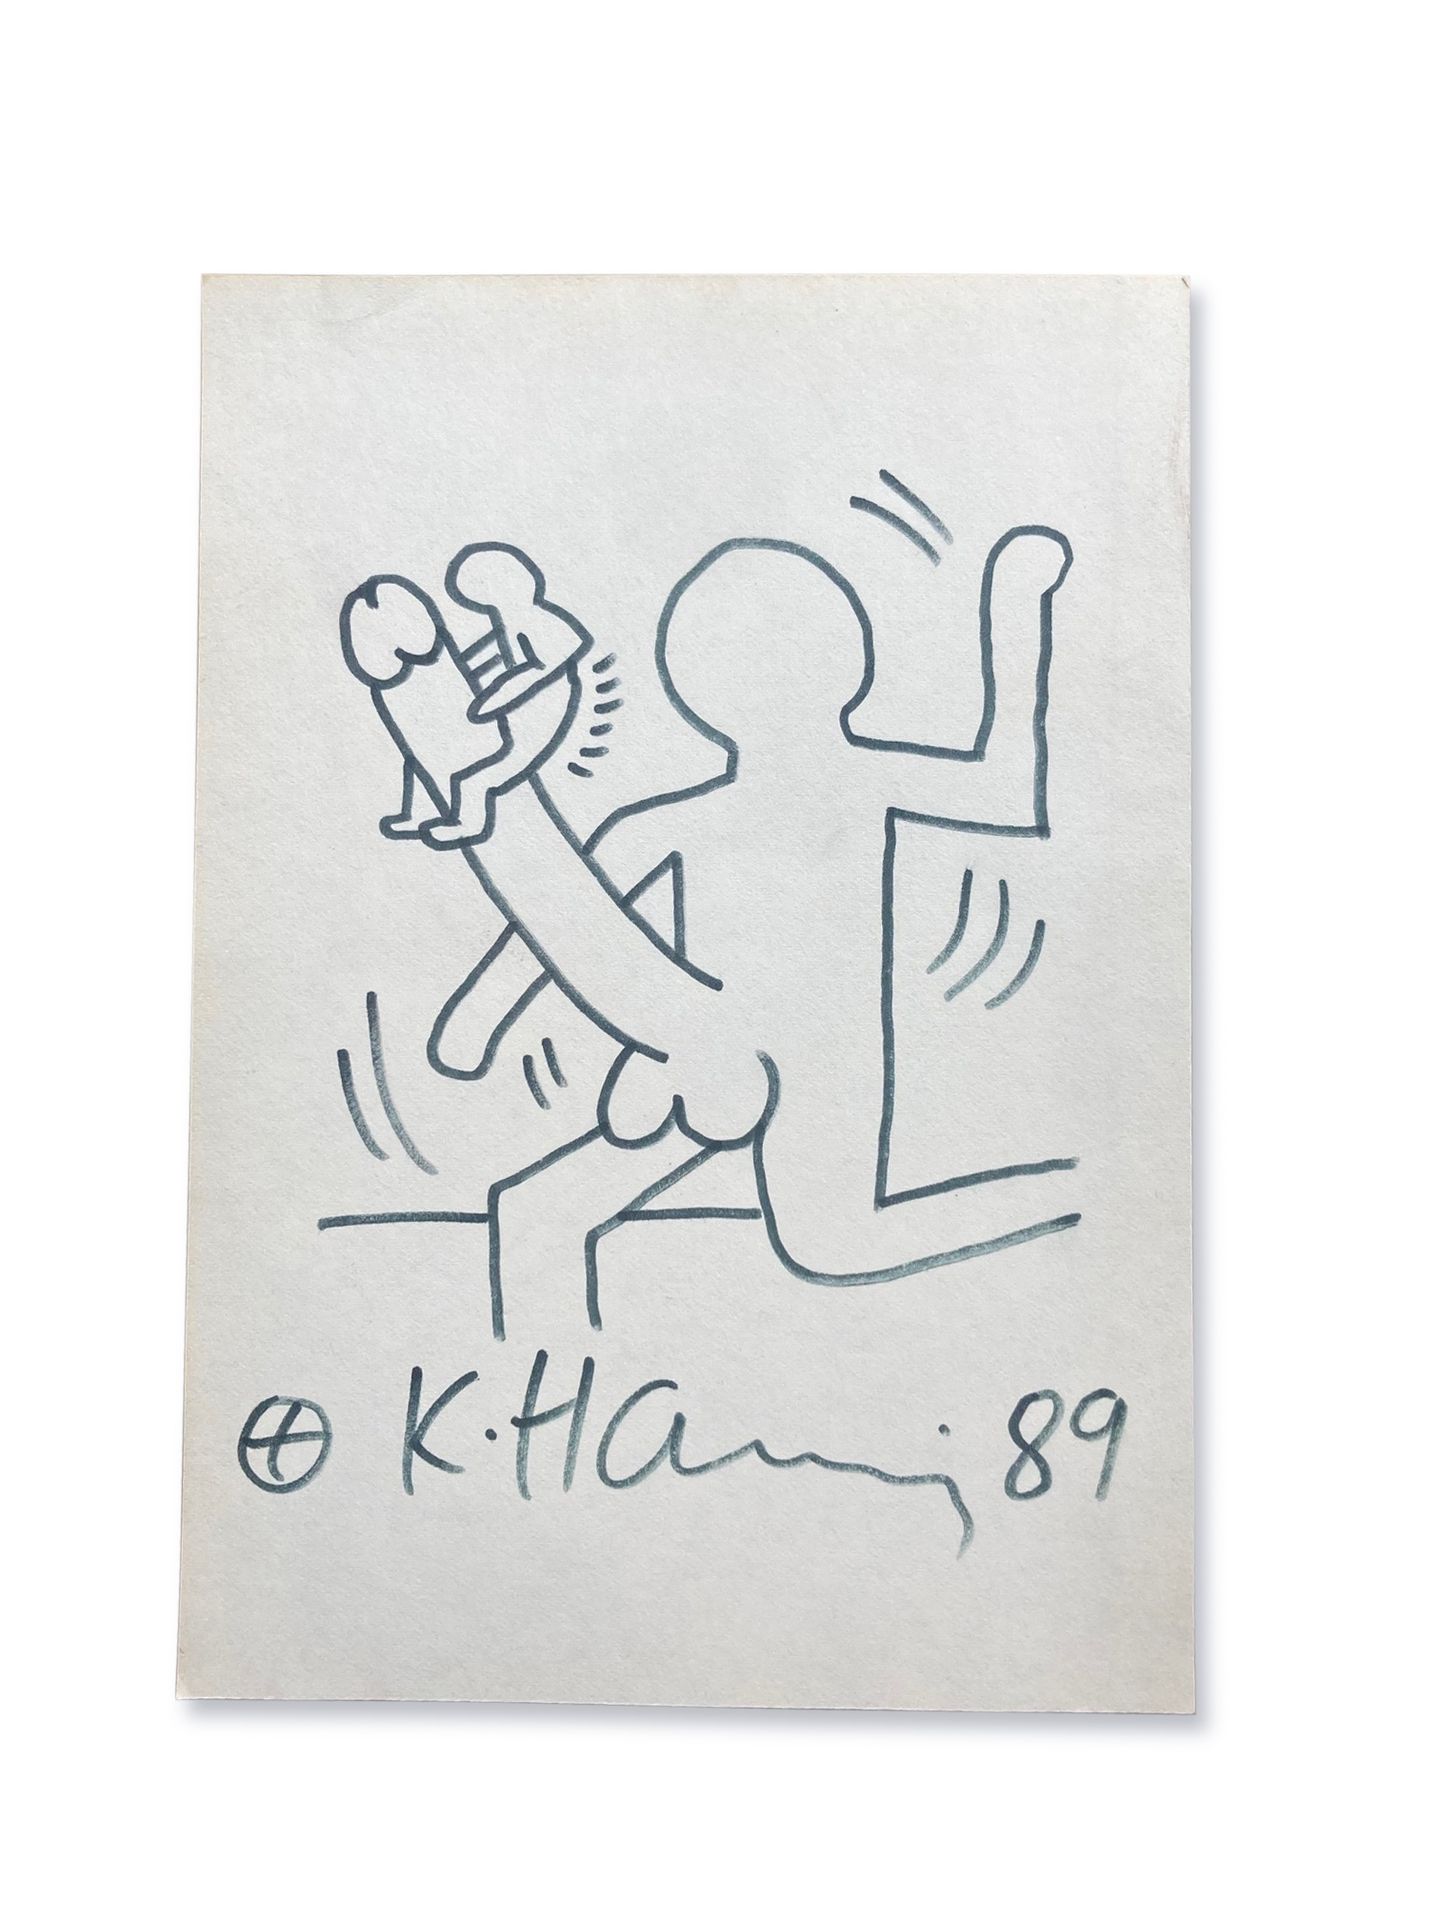 Keith HARING (1958-1990) (Attr.) Sas-titre, 1989
纸上毛笔画，有签名和日期 18 x 12.5 cm 
出处：私&hellip;